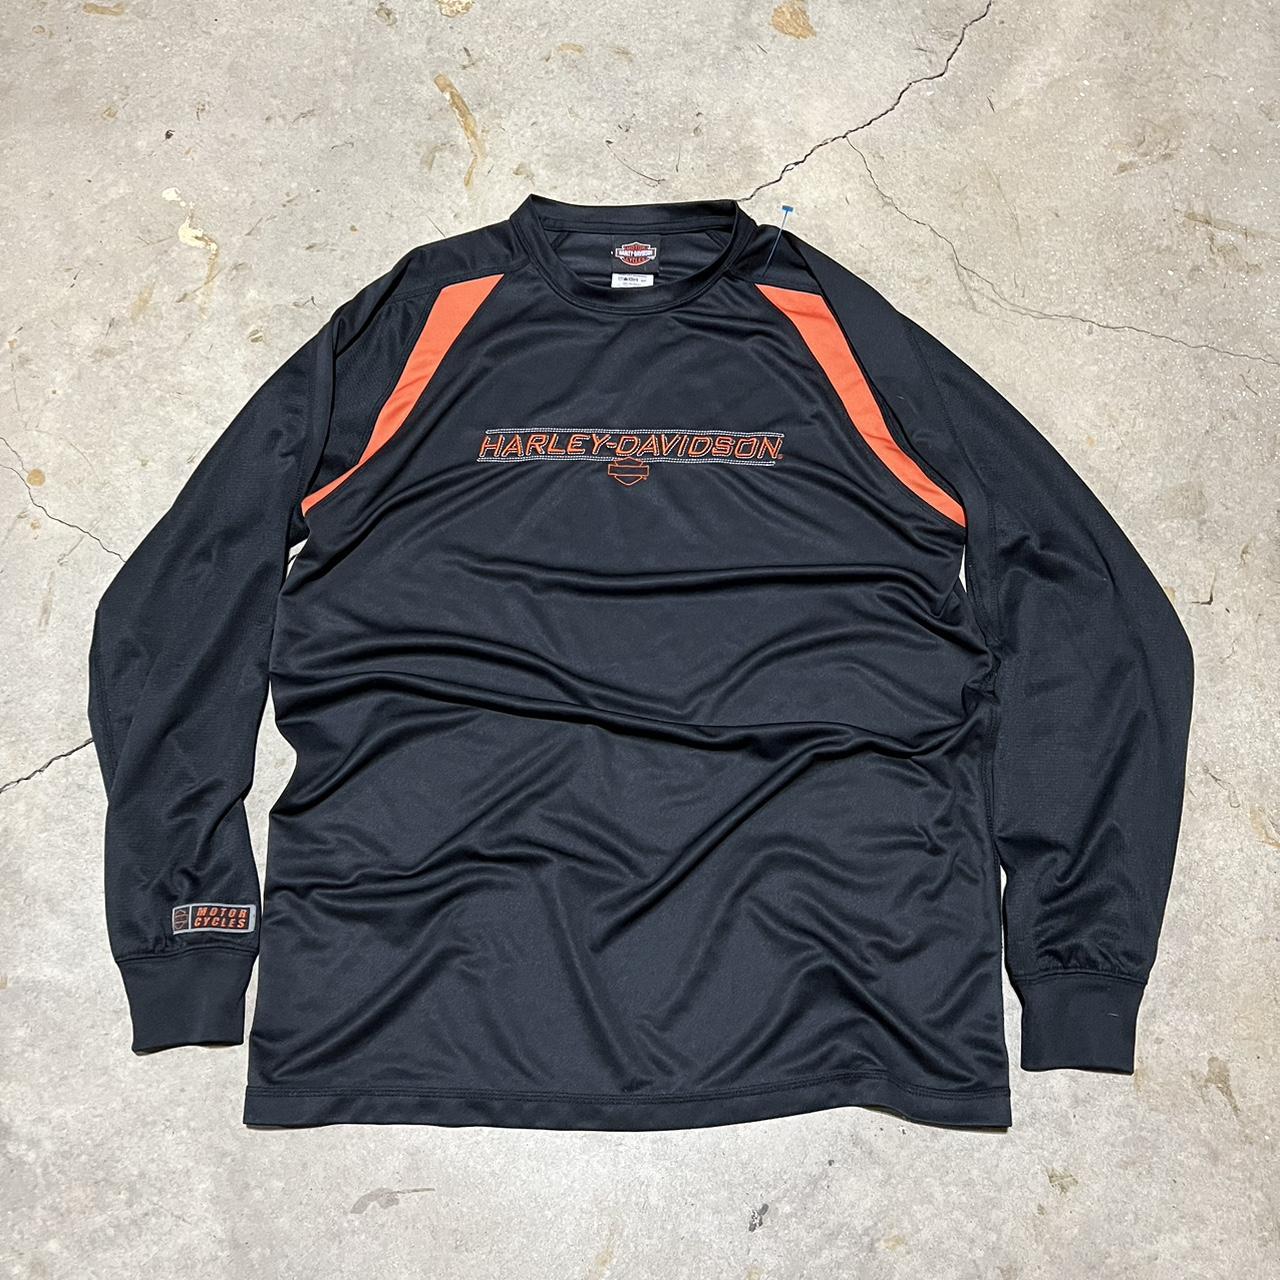 Harley Davidson Men's Black and Orange T-shirt